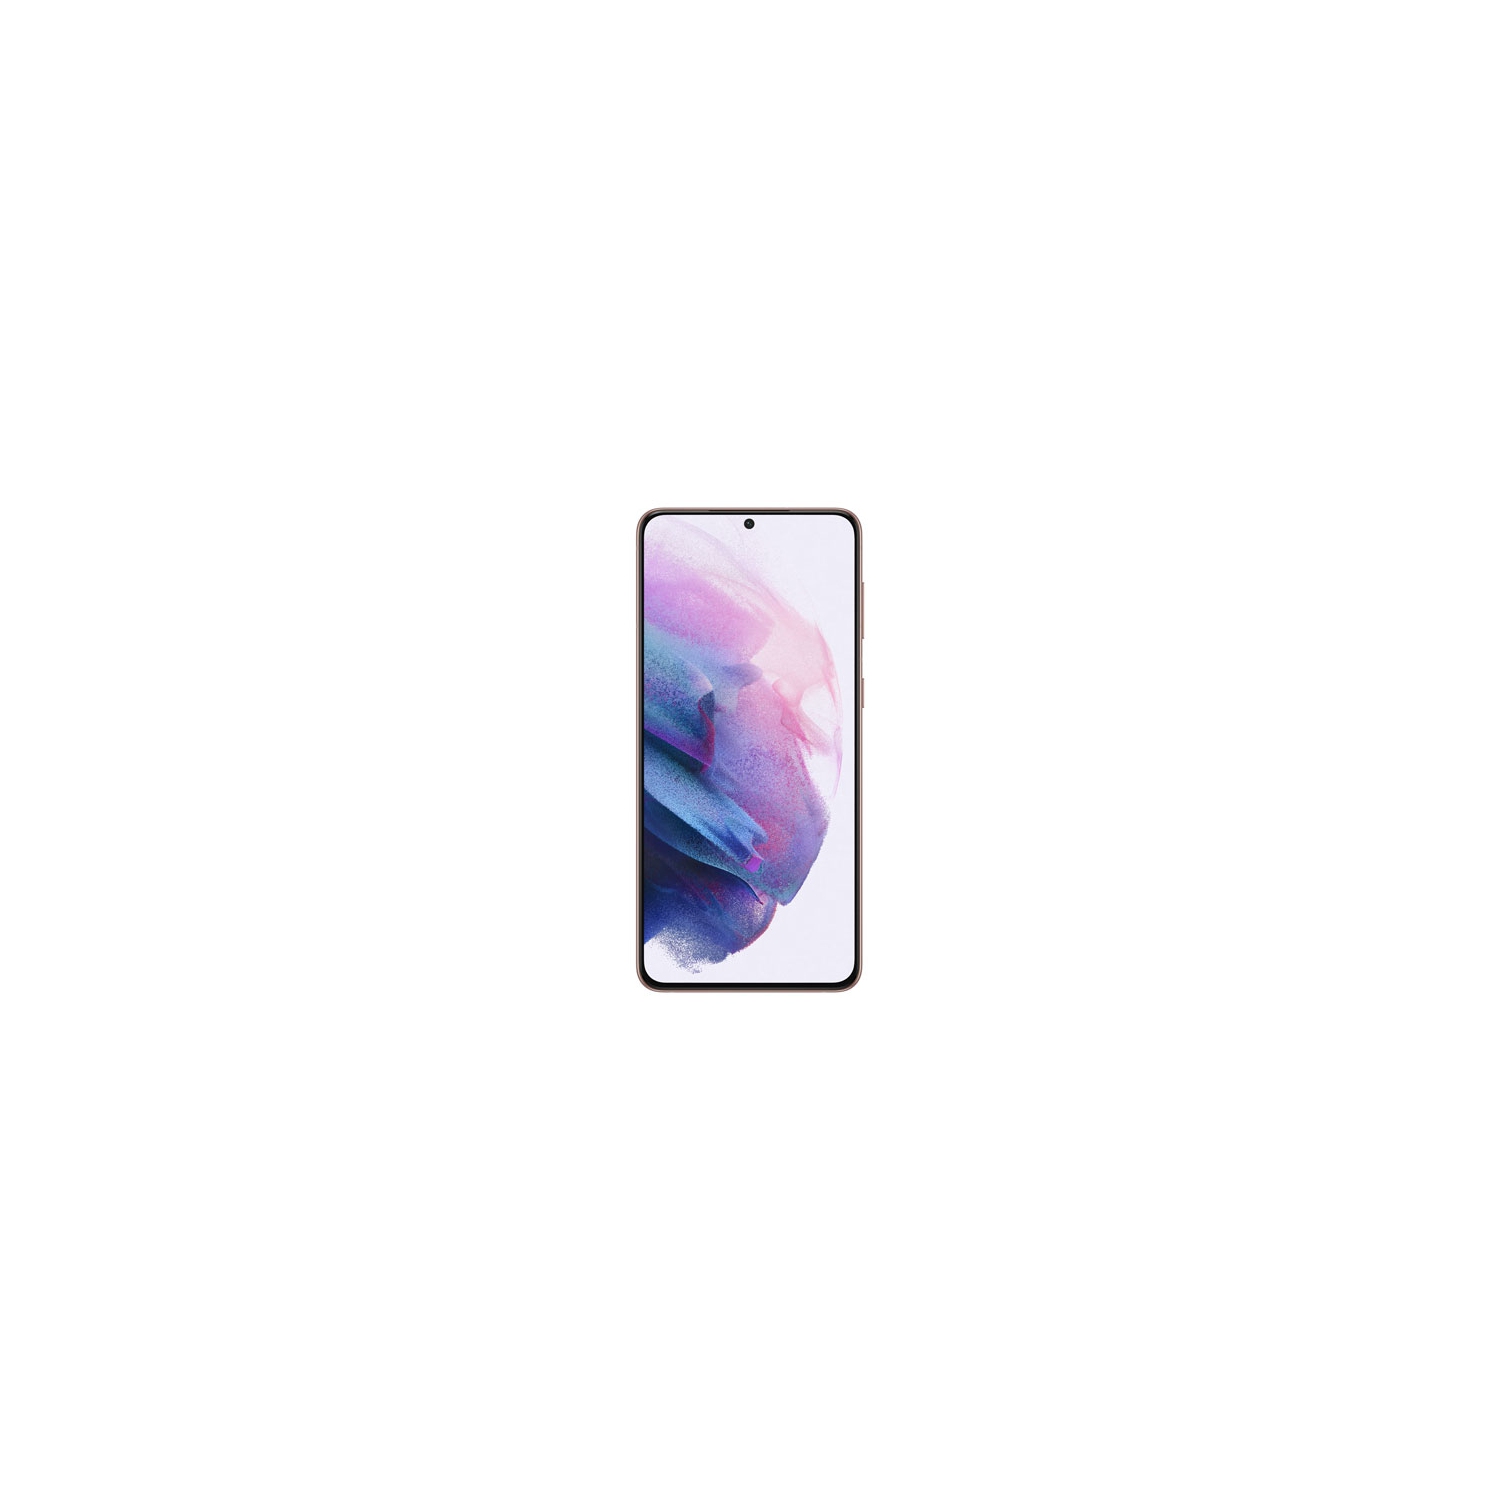 Refurbished (Excellent) - Samsung Galaxy S21+ 128GB Smartphone - Phantom Violet - Unlocked - Manufacturer Certified Refurbished